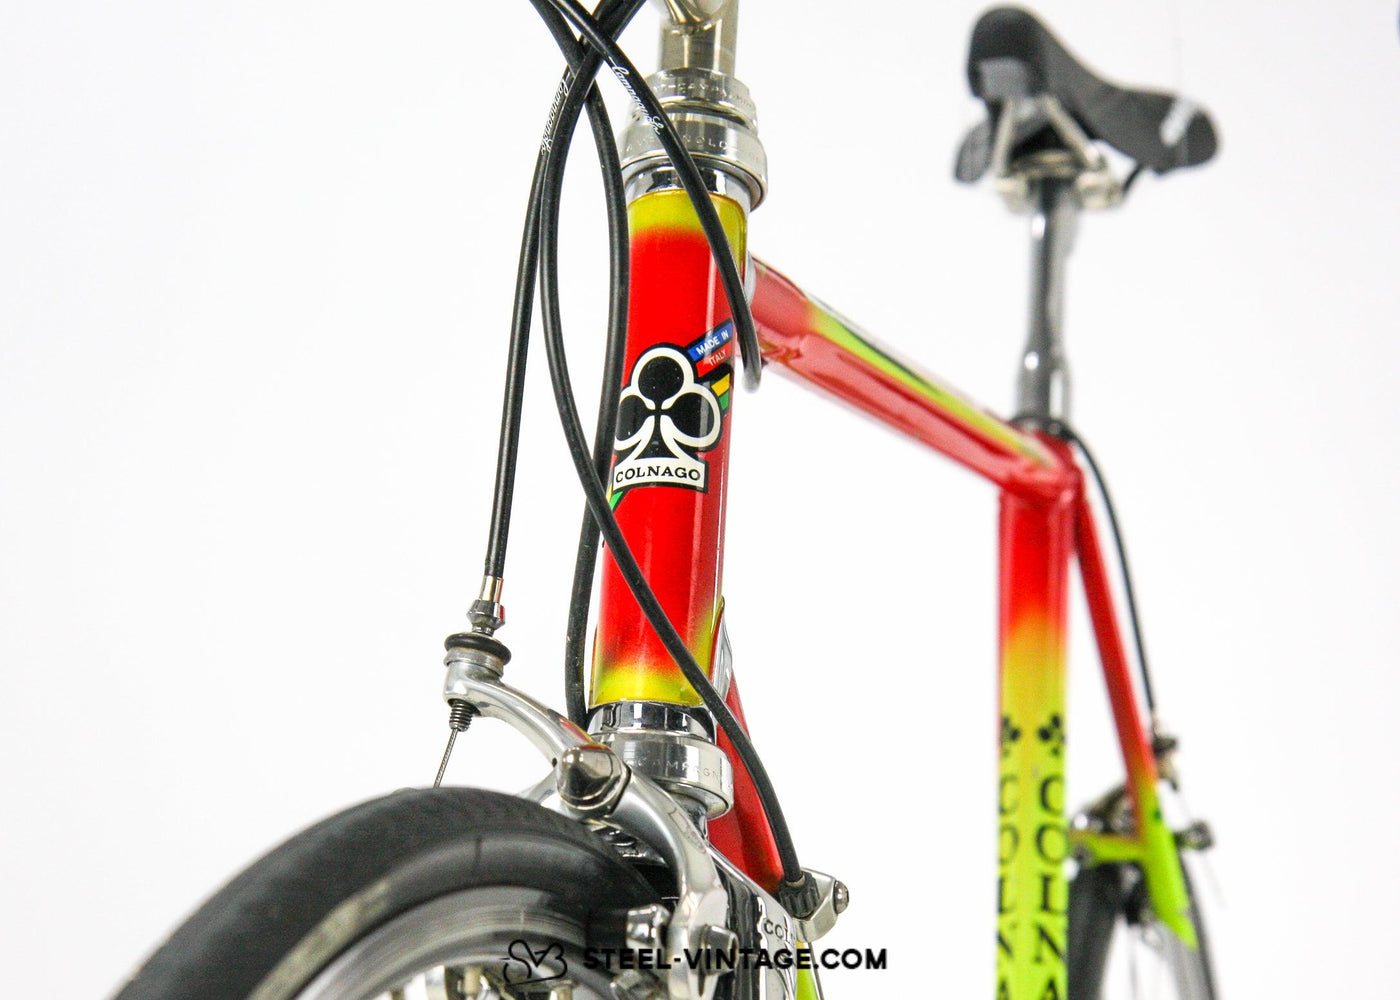 Colnago Master Olympic Classic Road Bike 1993 - Steel Vintage Bikes